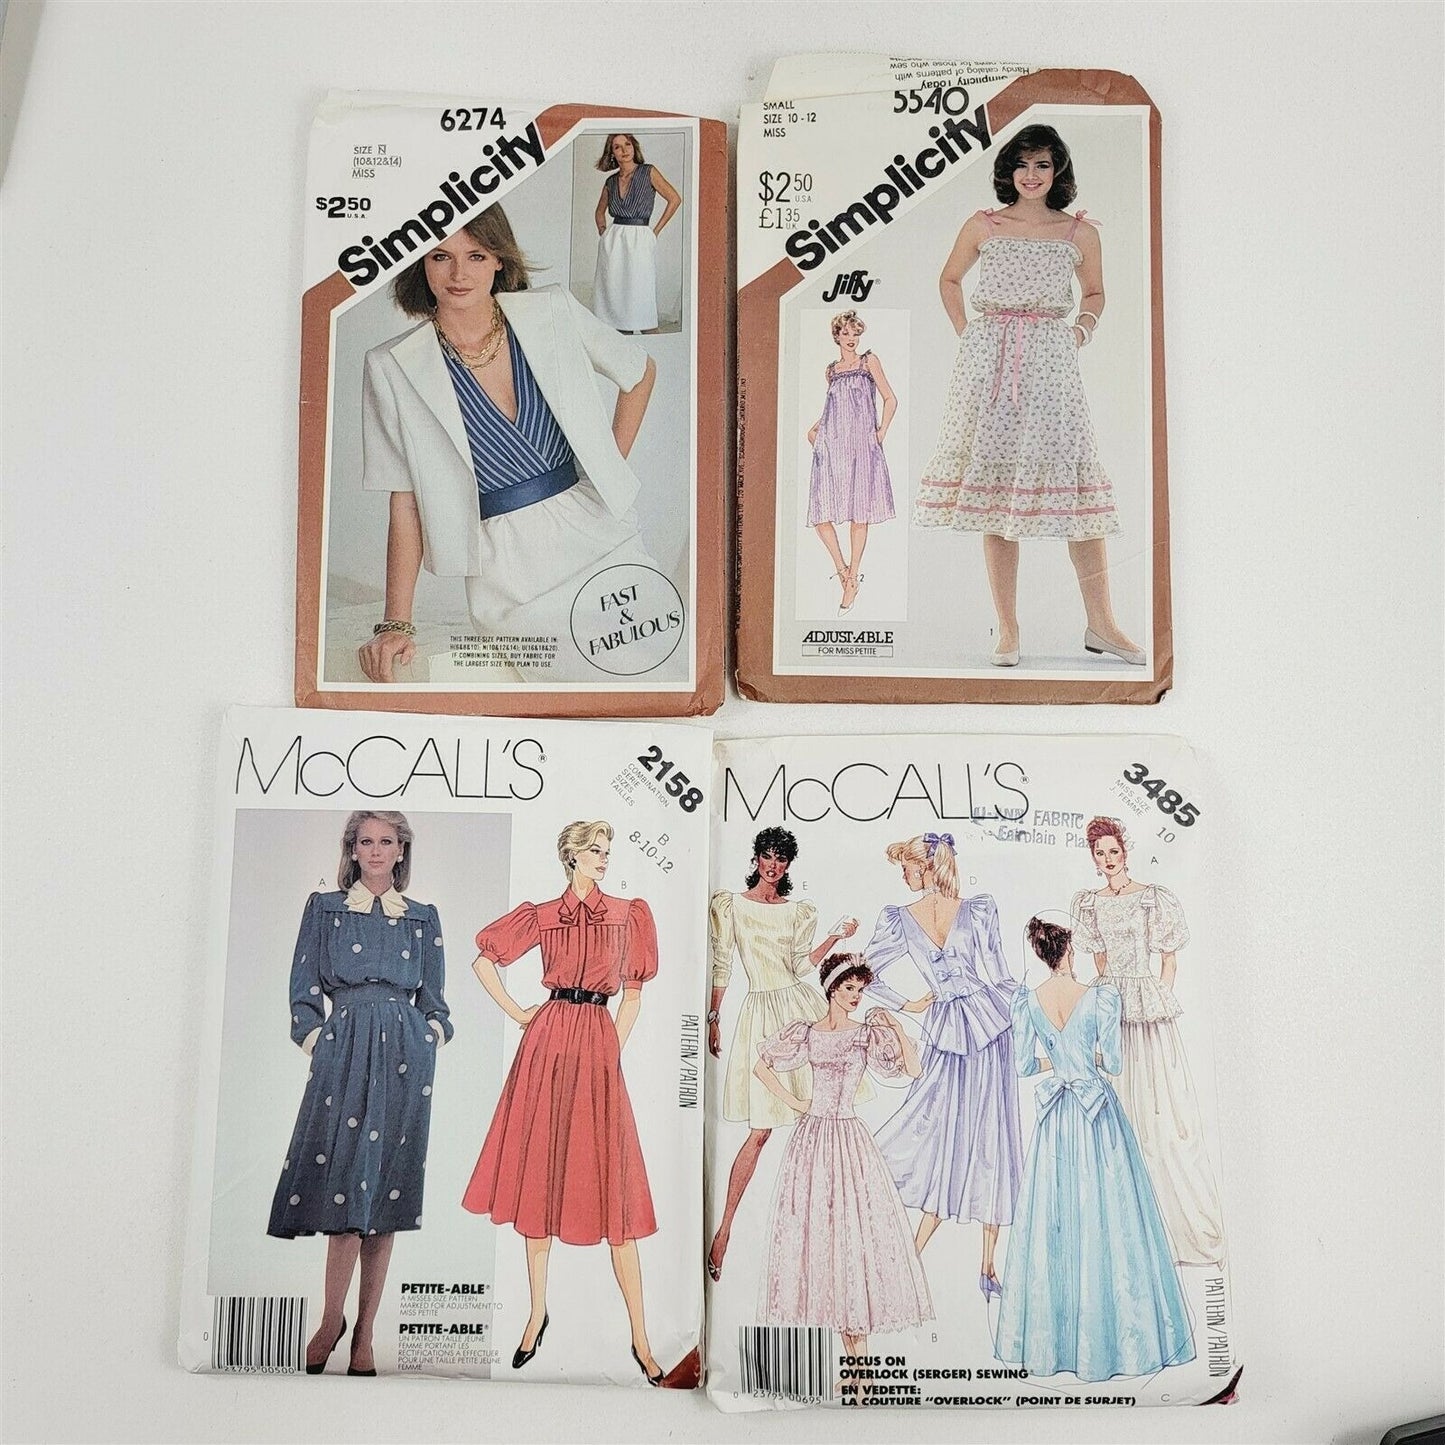 11 Vintage Sewing Patterns Misses Size 8 10 12 Dresses Skirts Tops Shorts